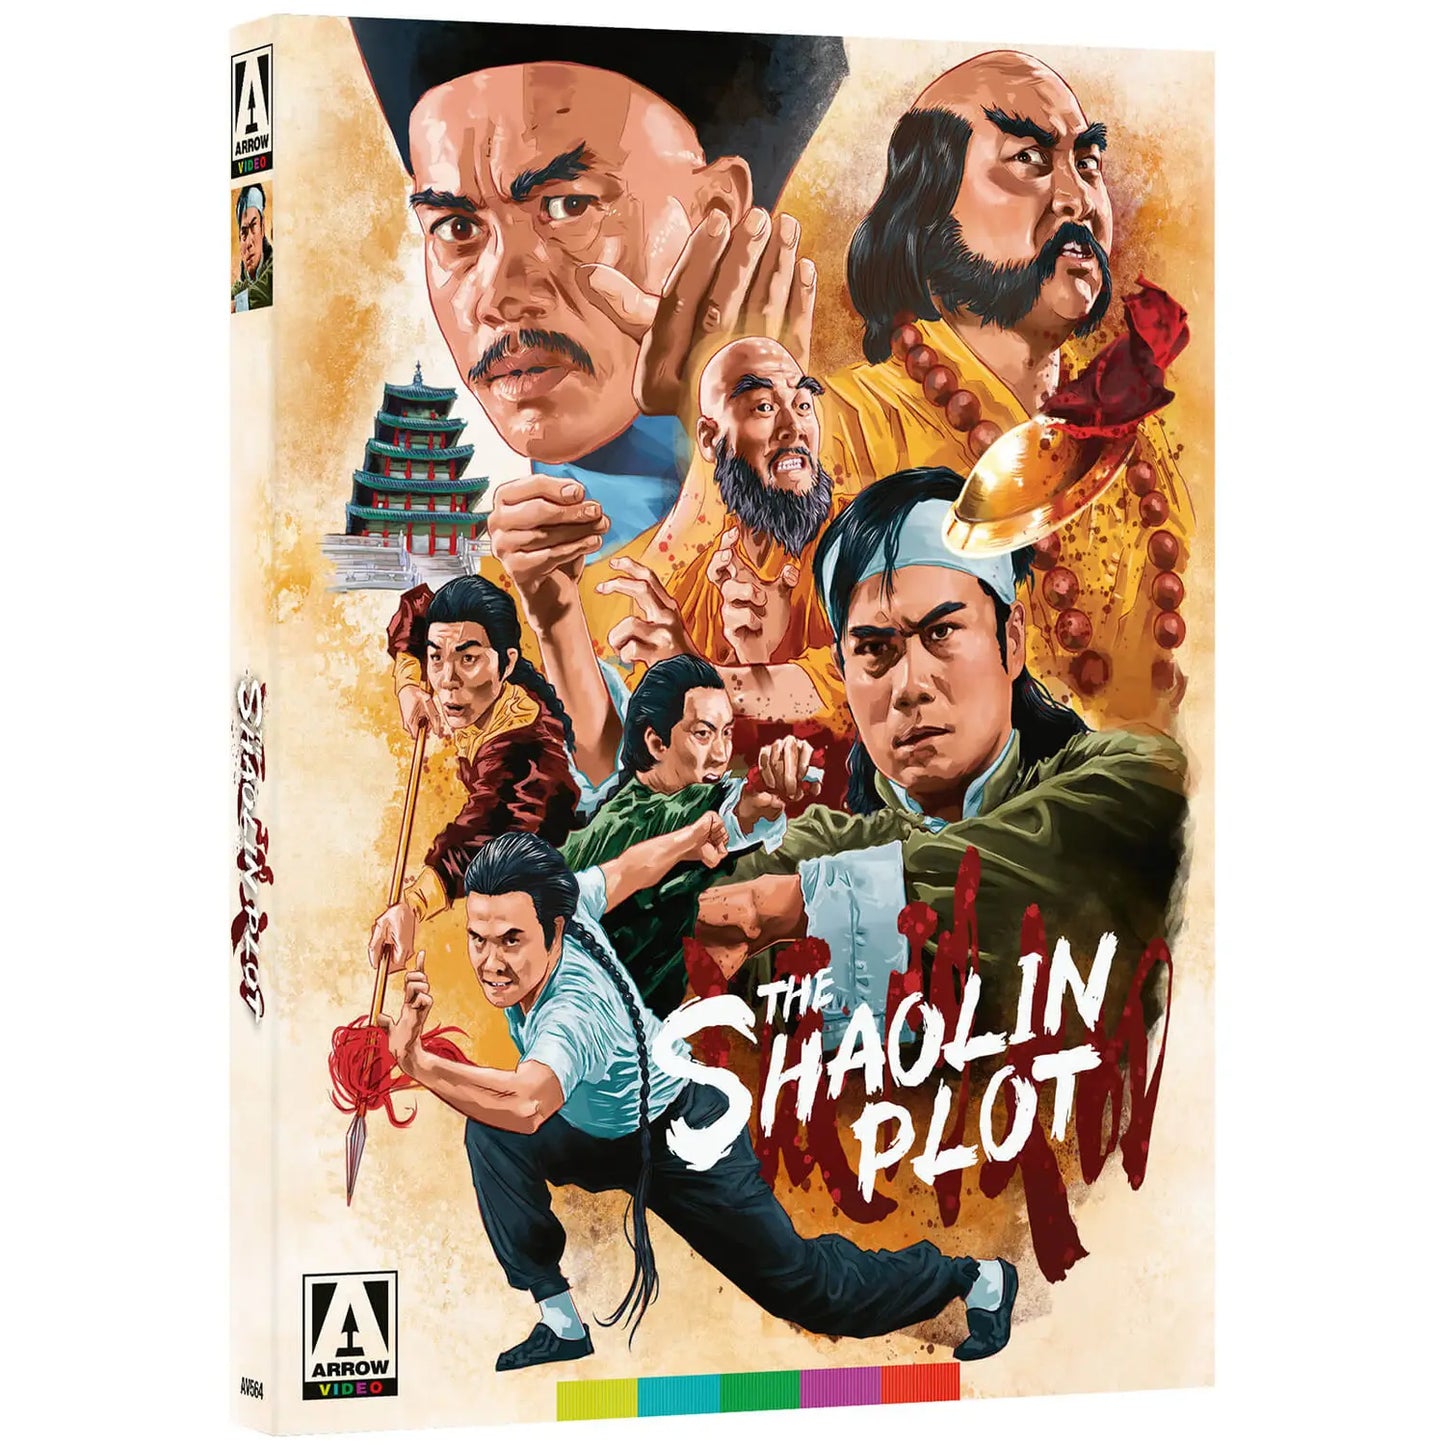 The Shaolin Plot Limited Edition Blu-ray with Slipcover (Arrow U.S.)